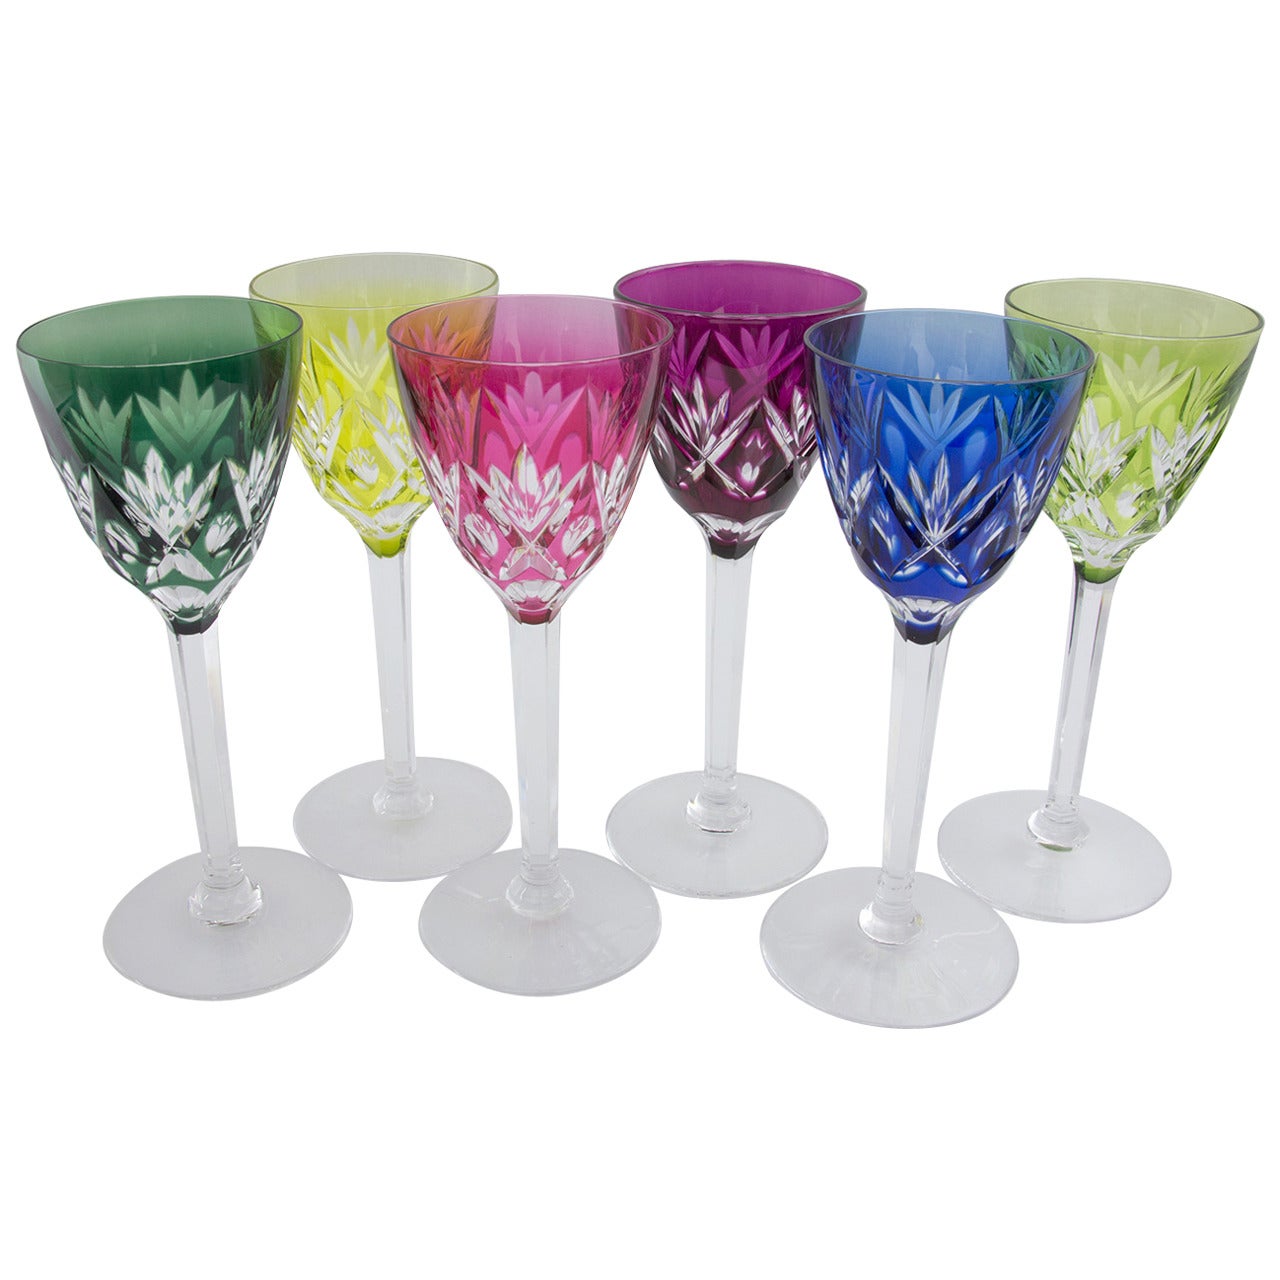 Six Val St. Lambert Tall Stemmed Colored Wine Glasses